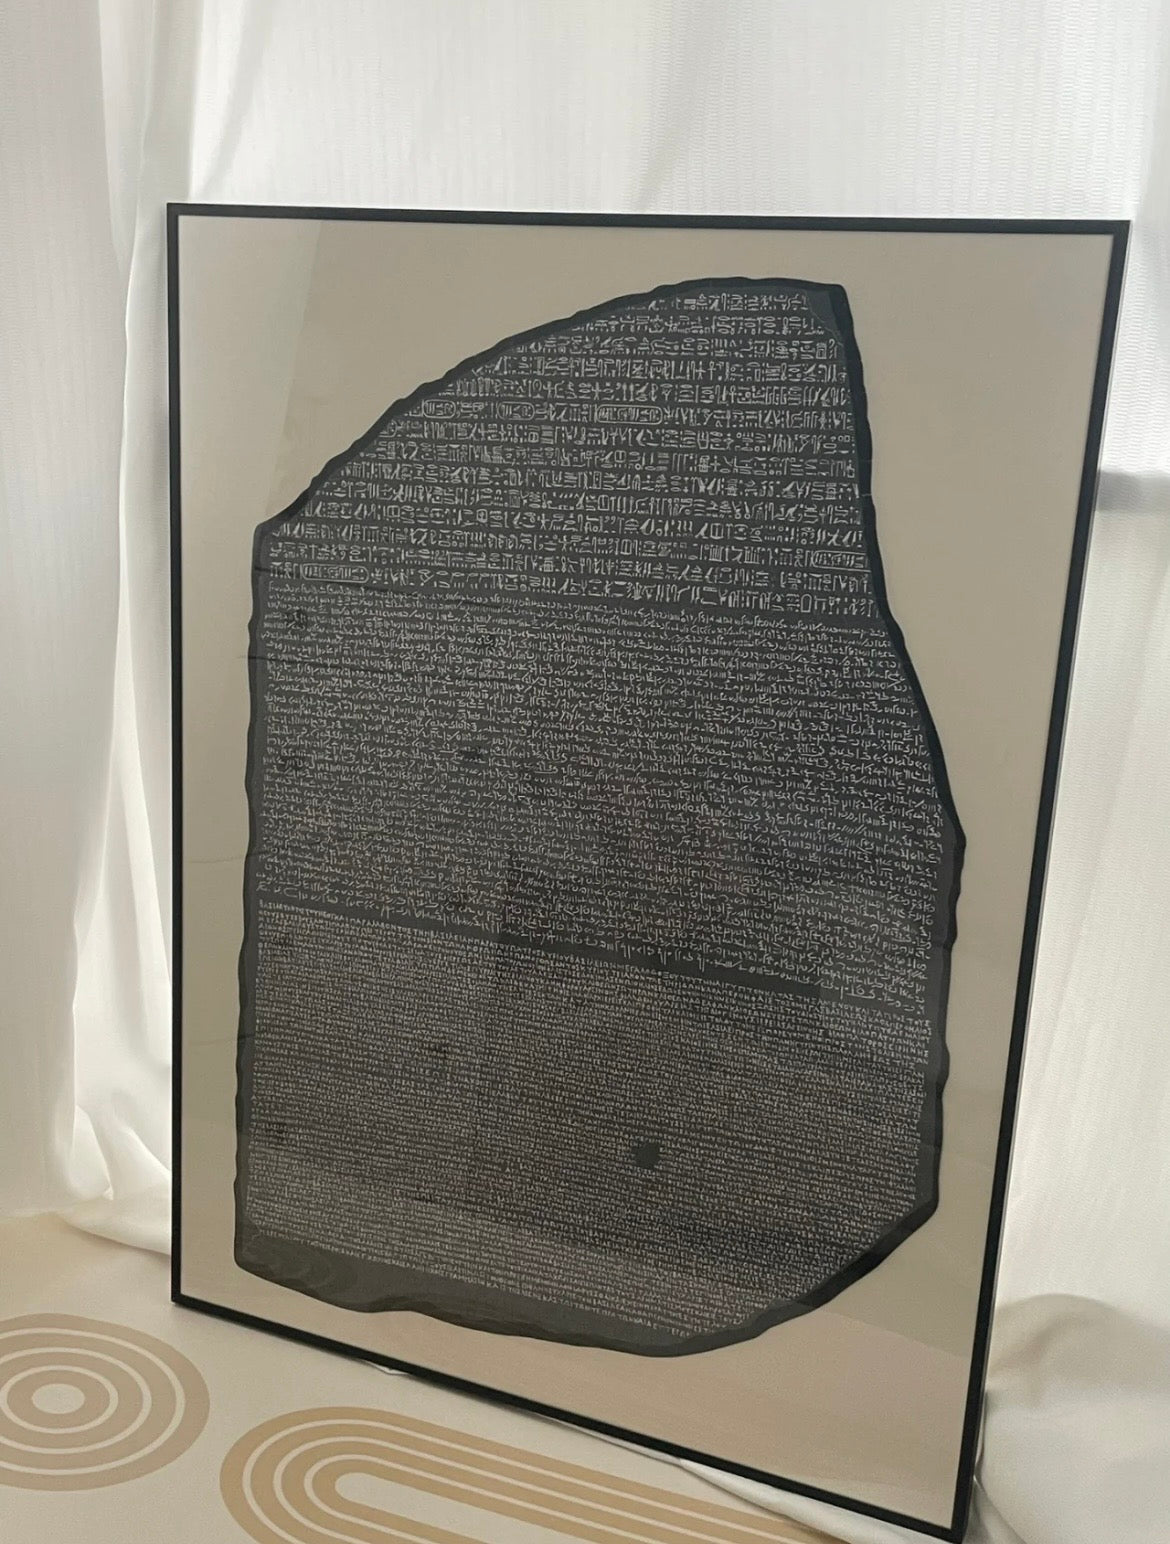 Rosetta Stone 800 piece puzzle